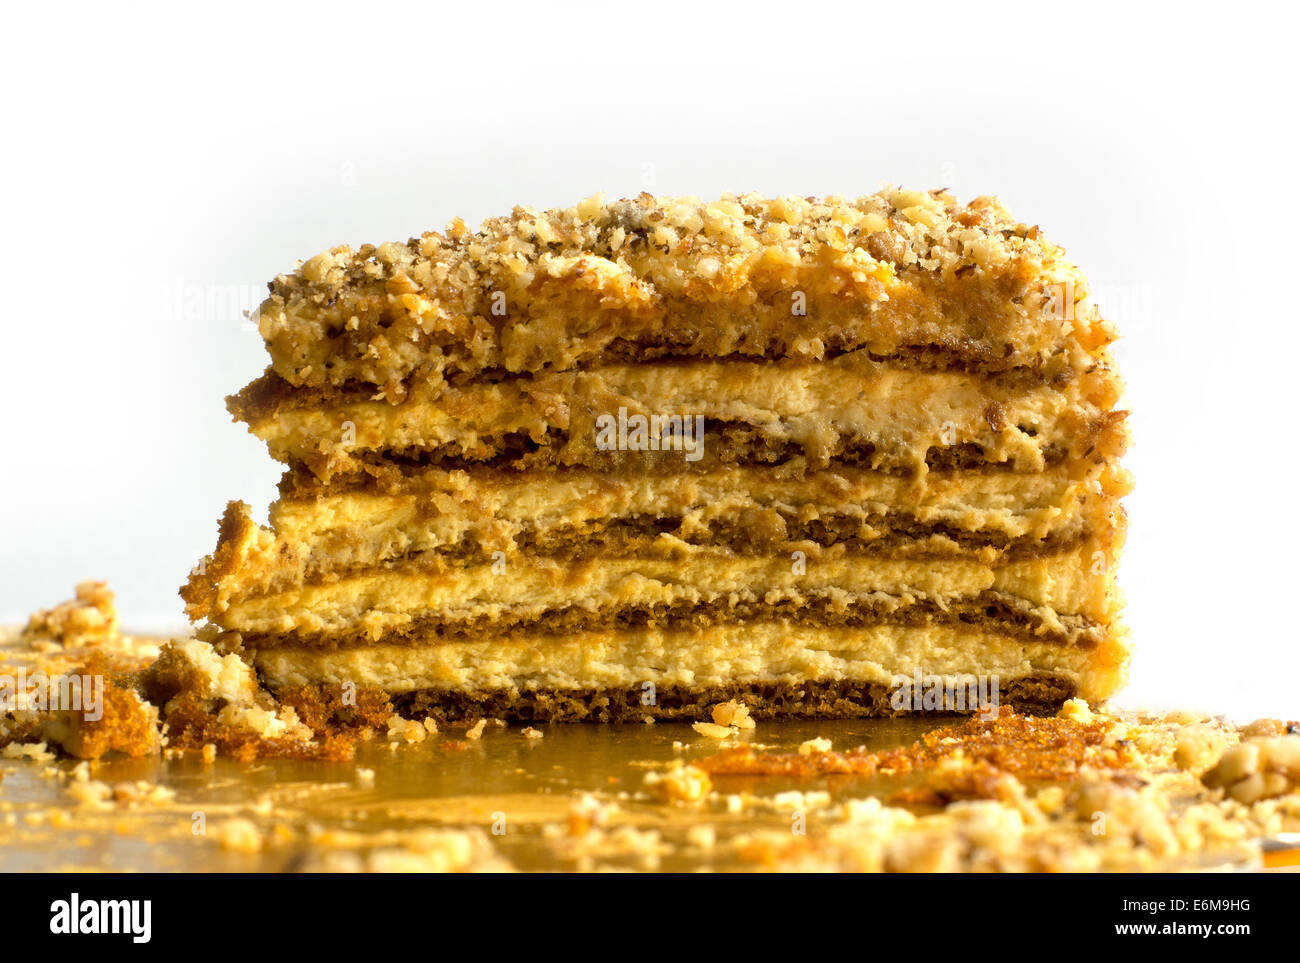 Close up of walnut cake sur fond blanc Banque D'Images